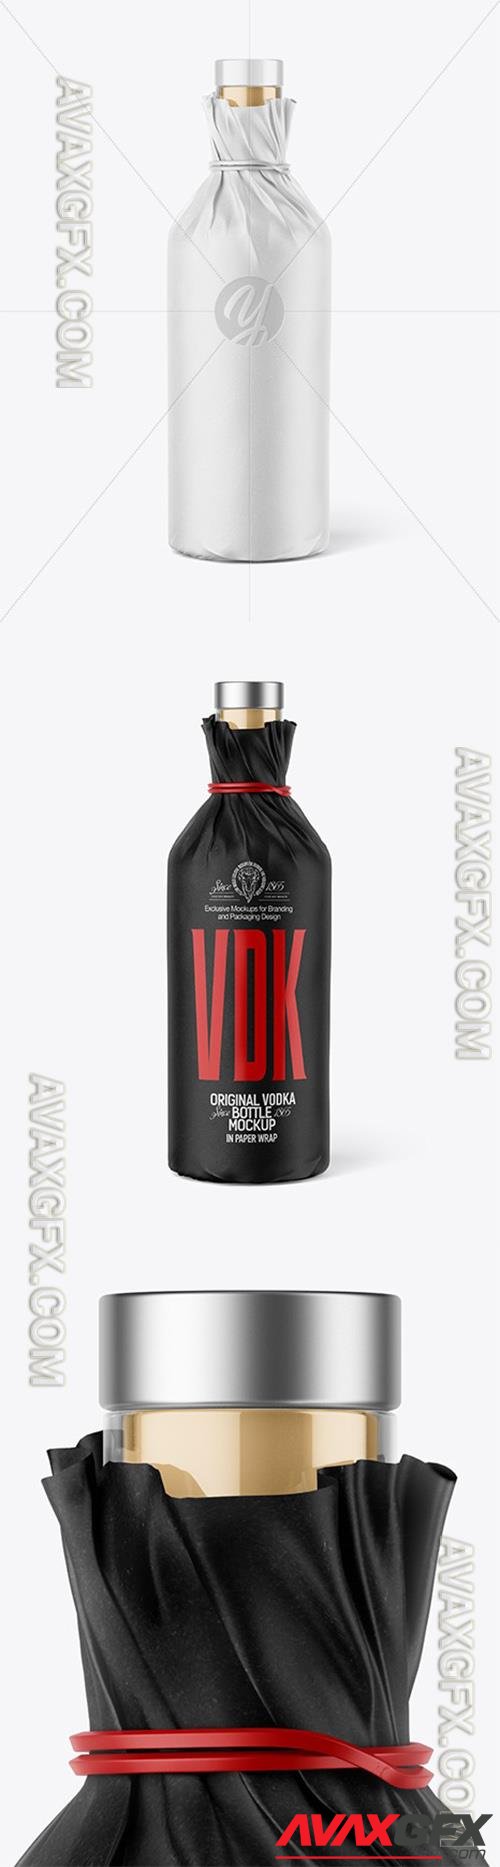 Vodka Bottle in Paper Wrap Mockup 46926 TIF